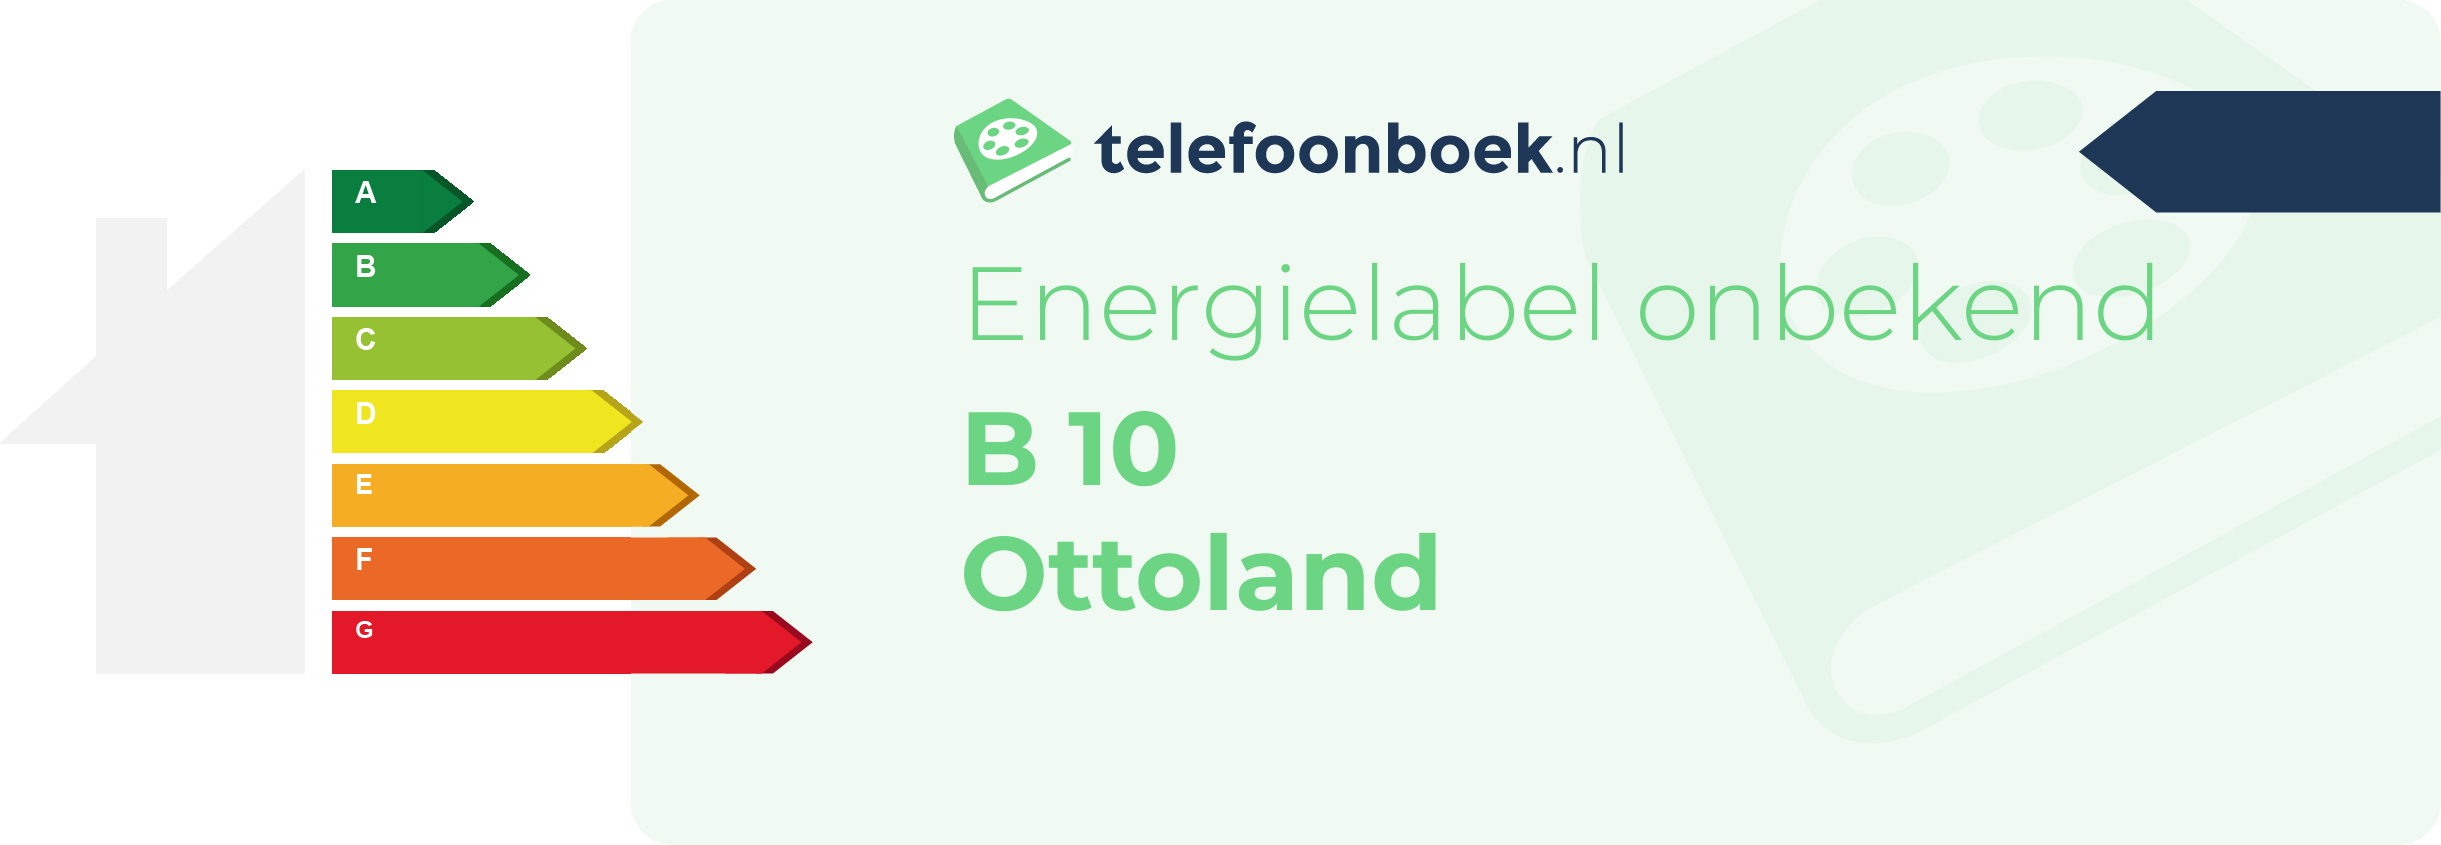 Energielabel B 10 Ottoland